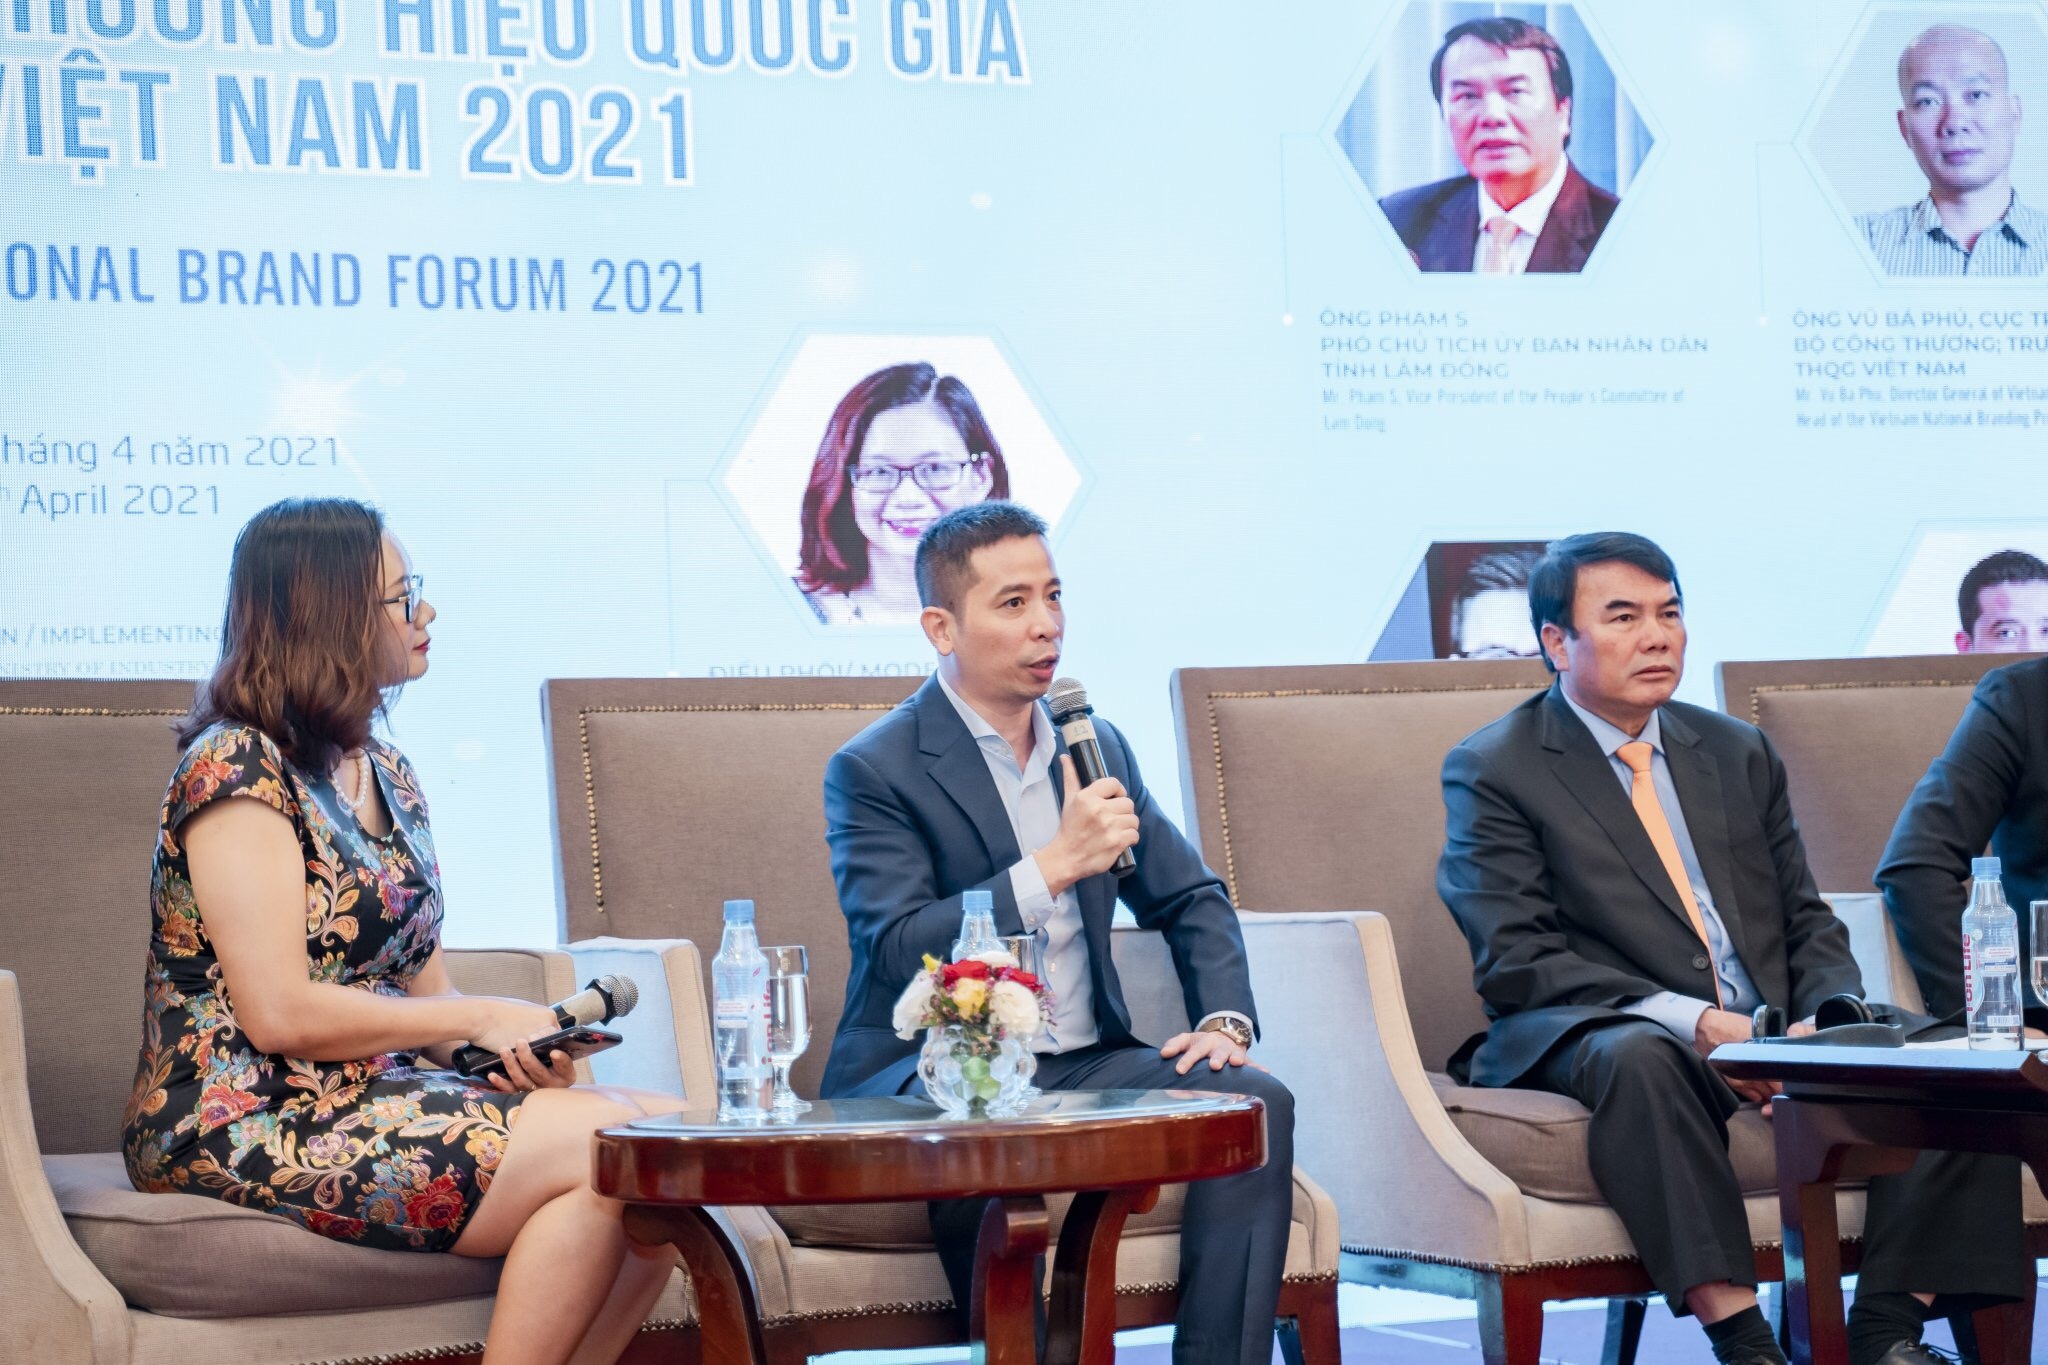 Vietnam Value Forum 2021 officially kicked off